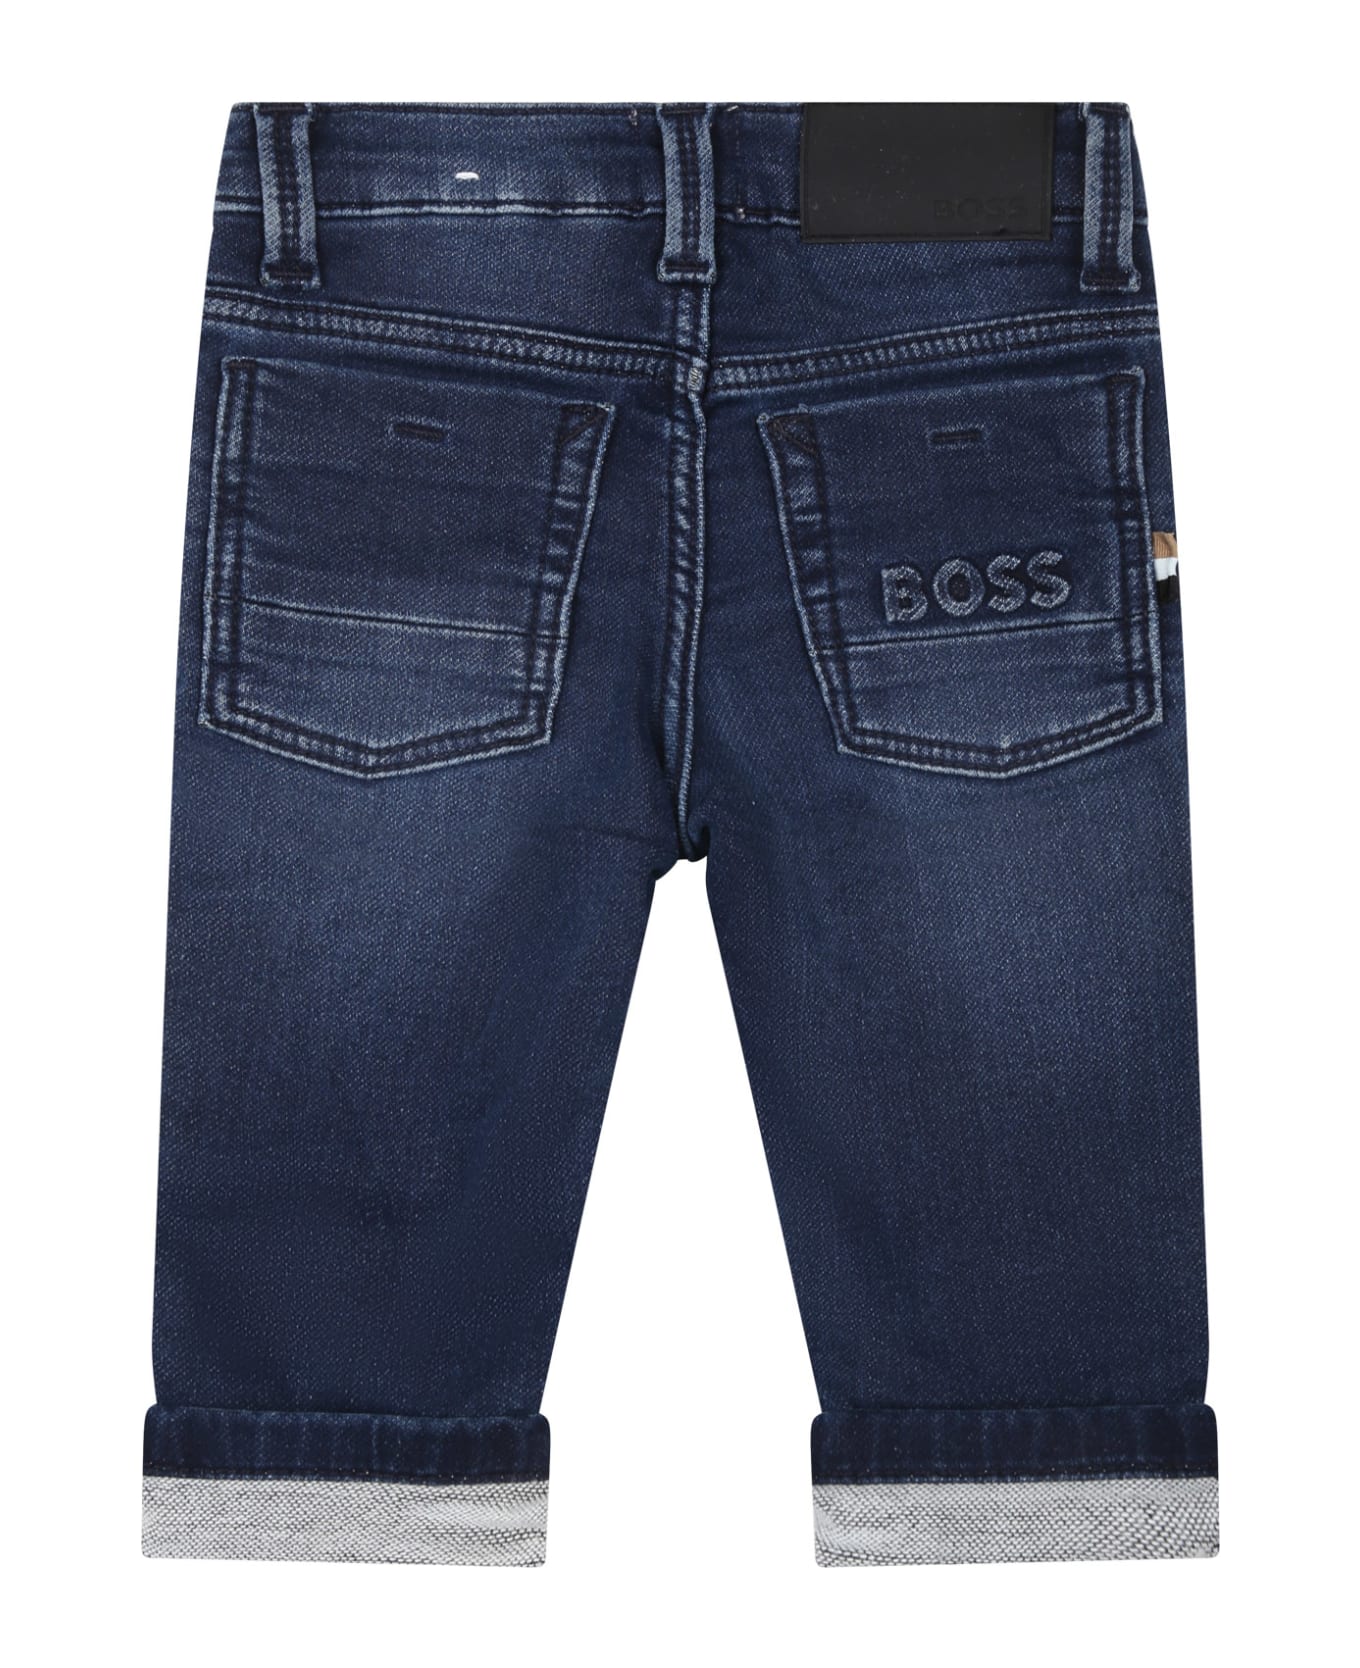 Hugo Boss Blue Jeans For Baby Boy With Logo - Denim